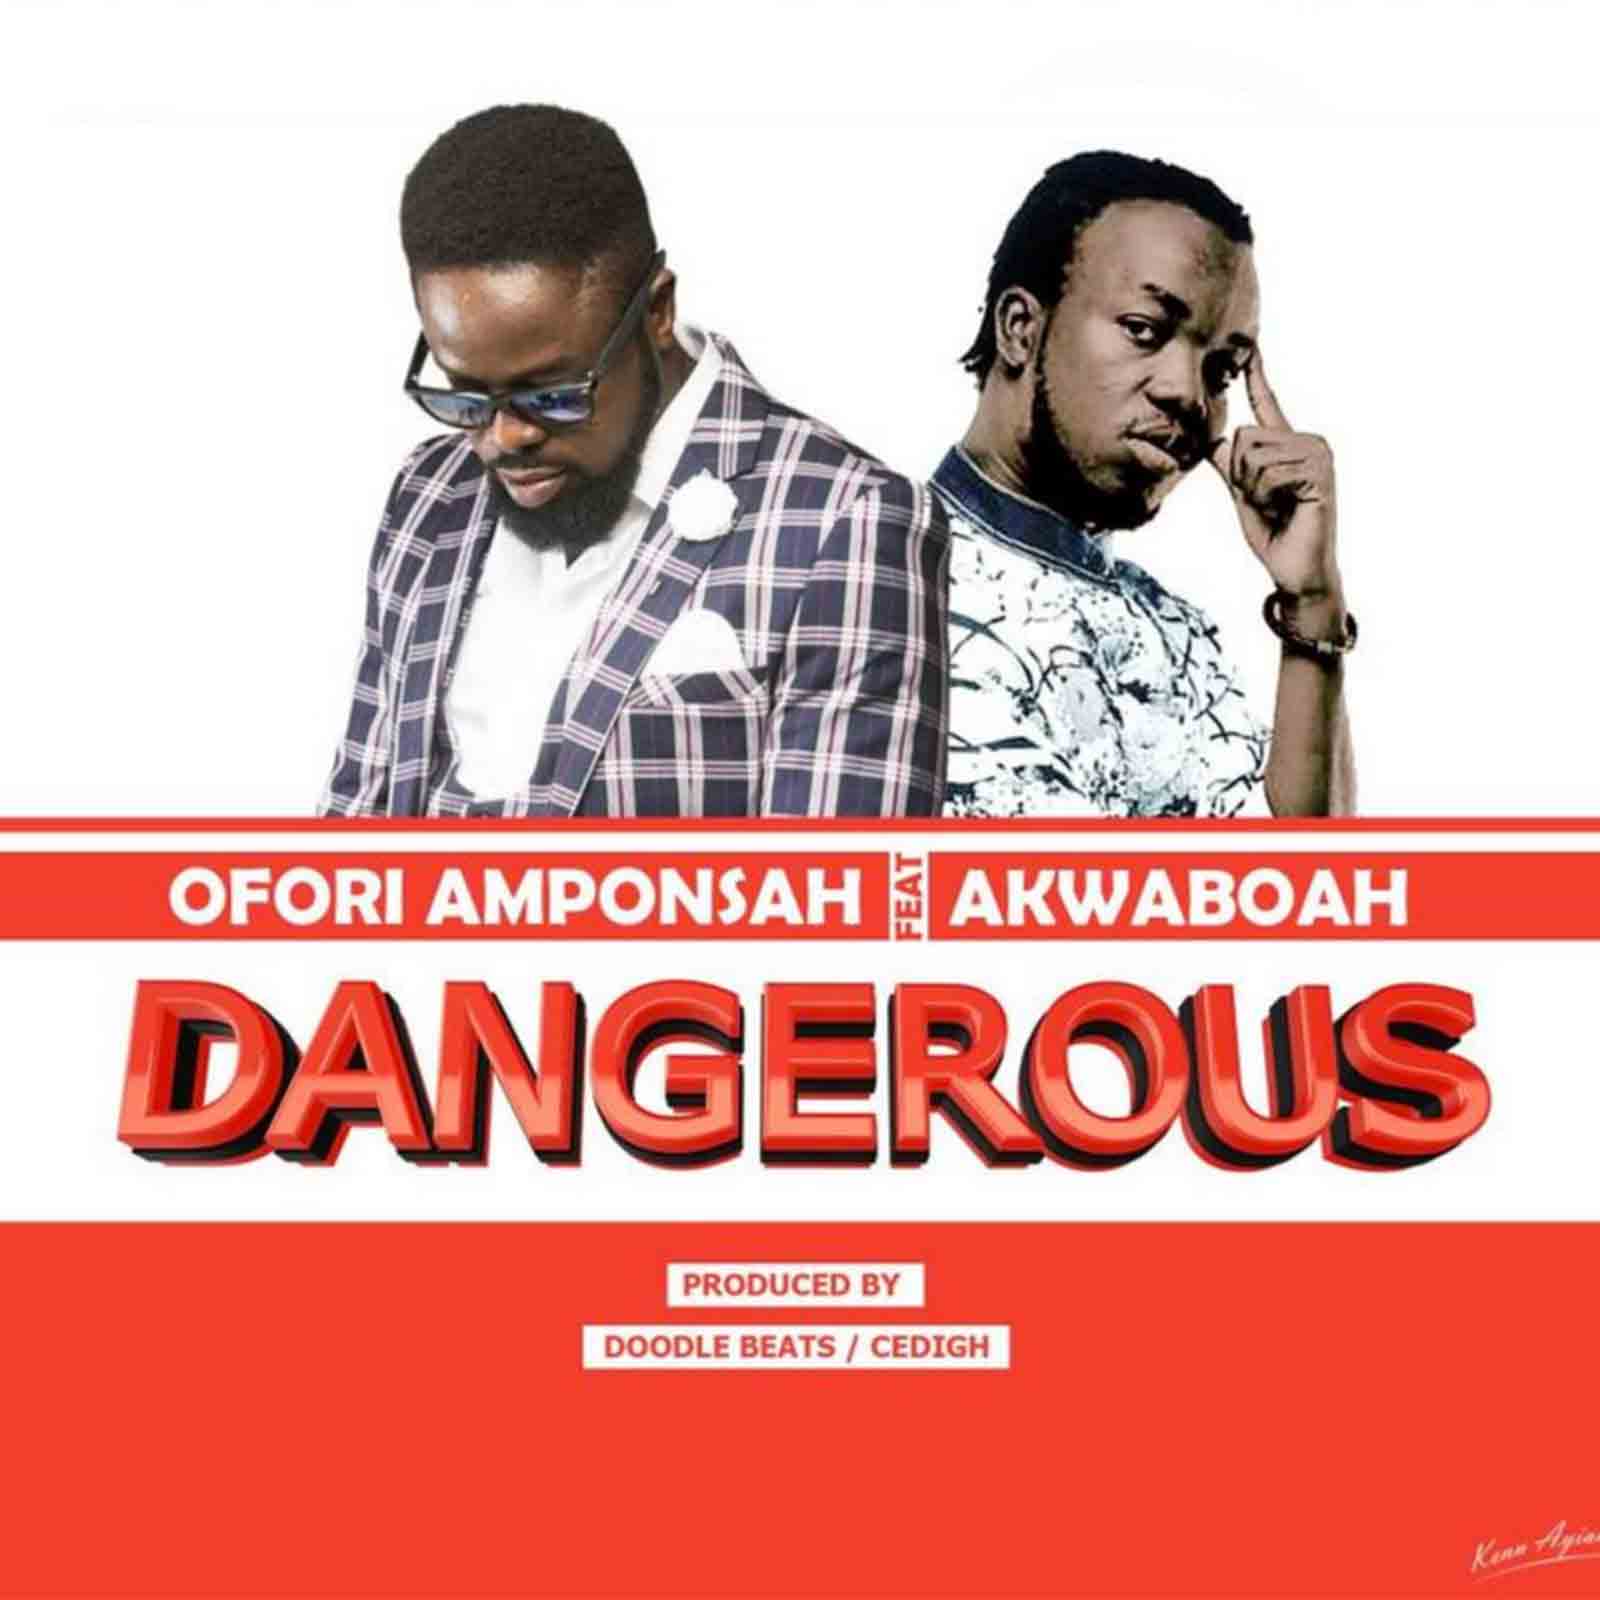 Dangerous by Ofori Amponsah feat. Akwaboah